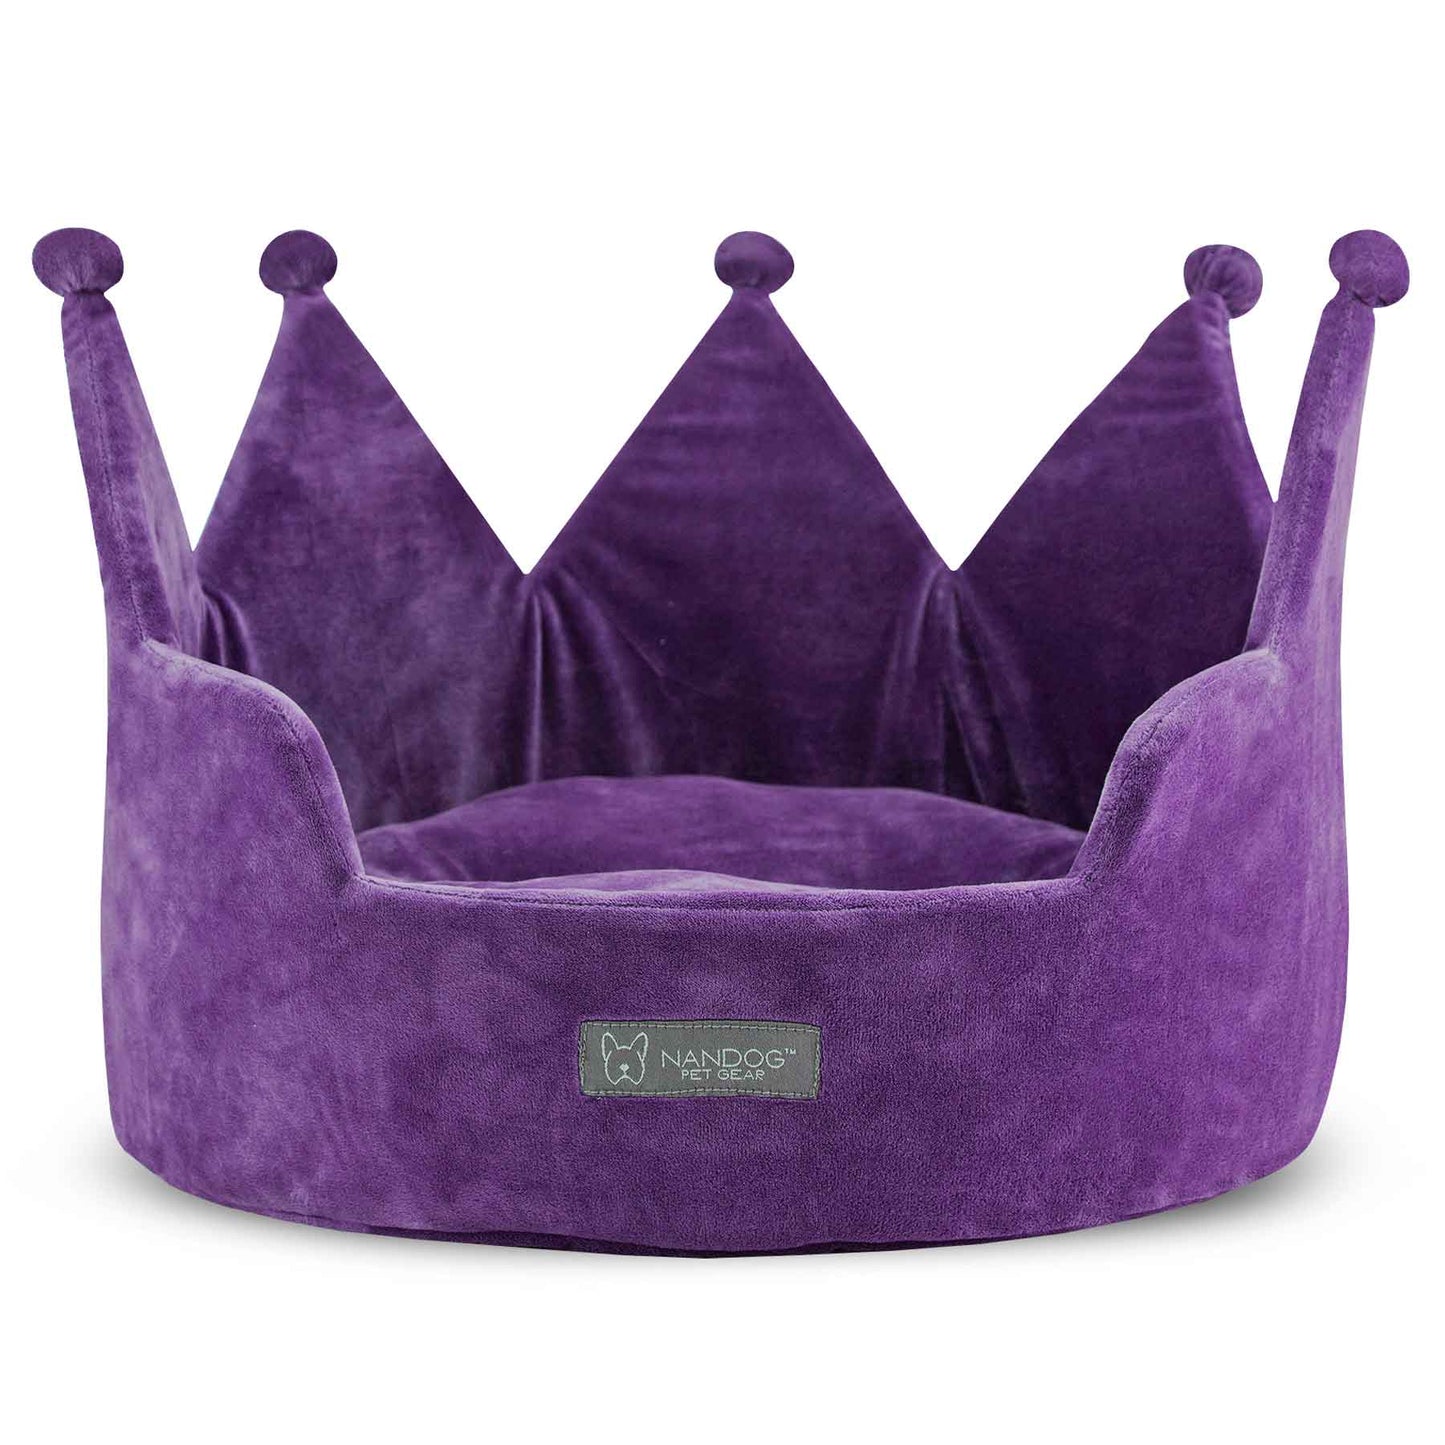 Nandog Crown Bed Super Soft Luxe Bed - Plush Purple